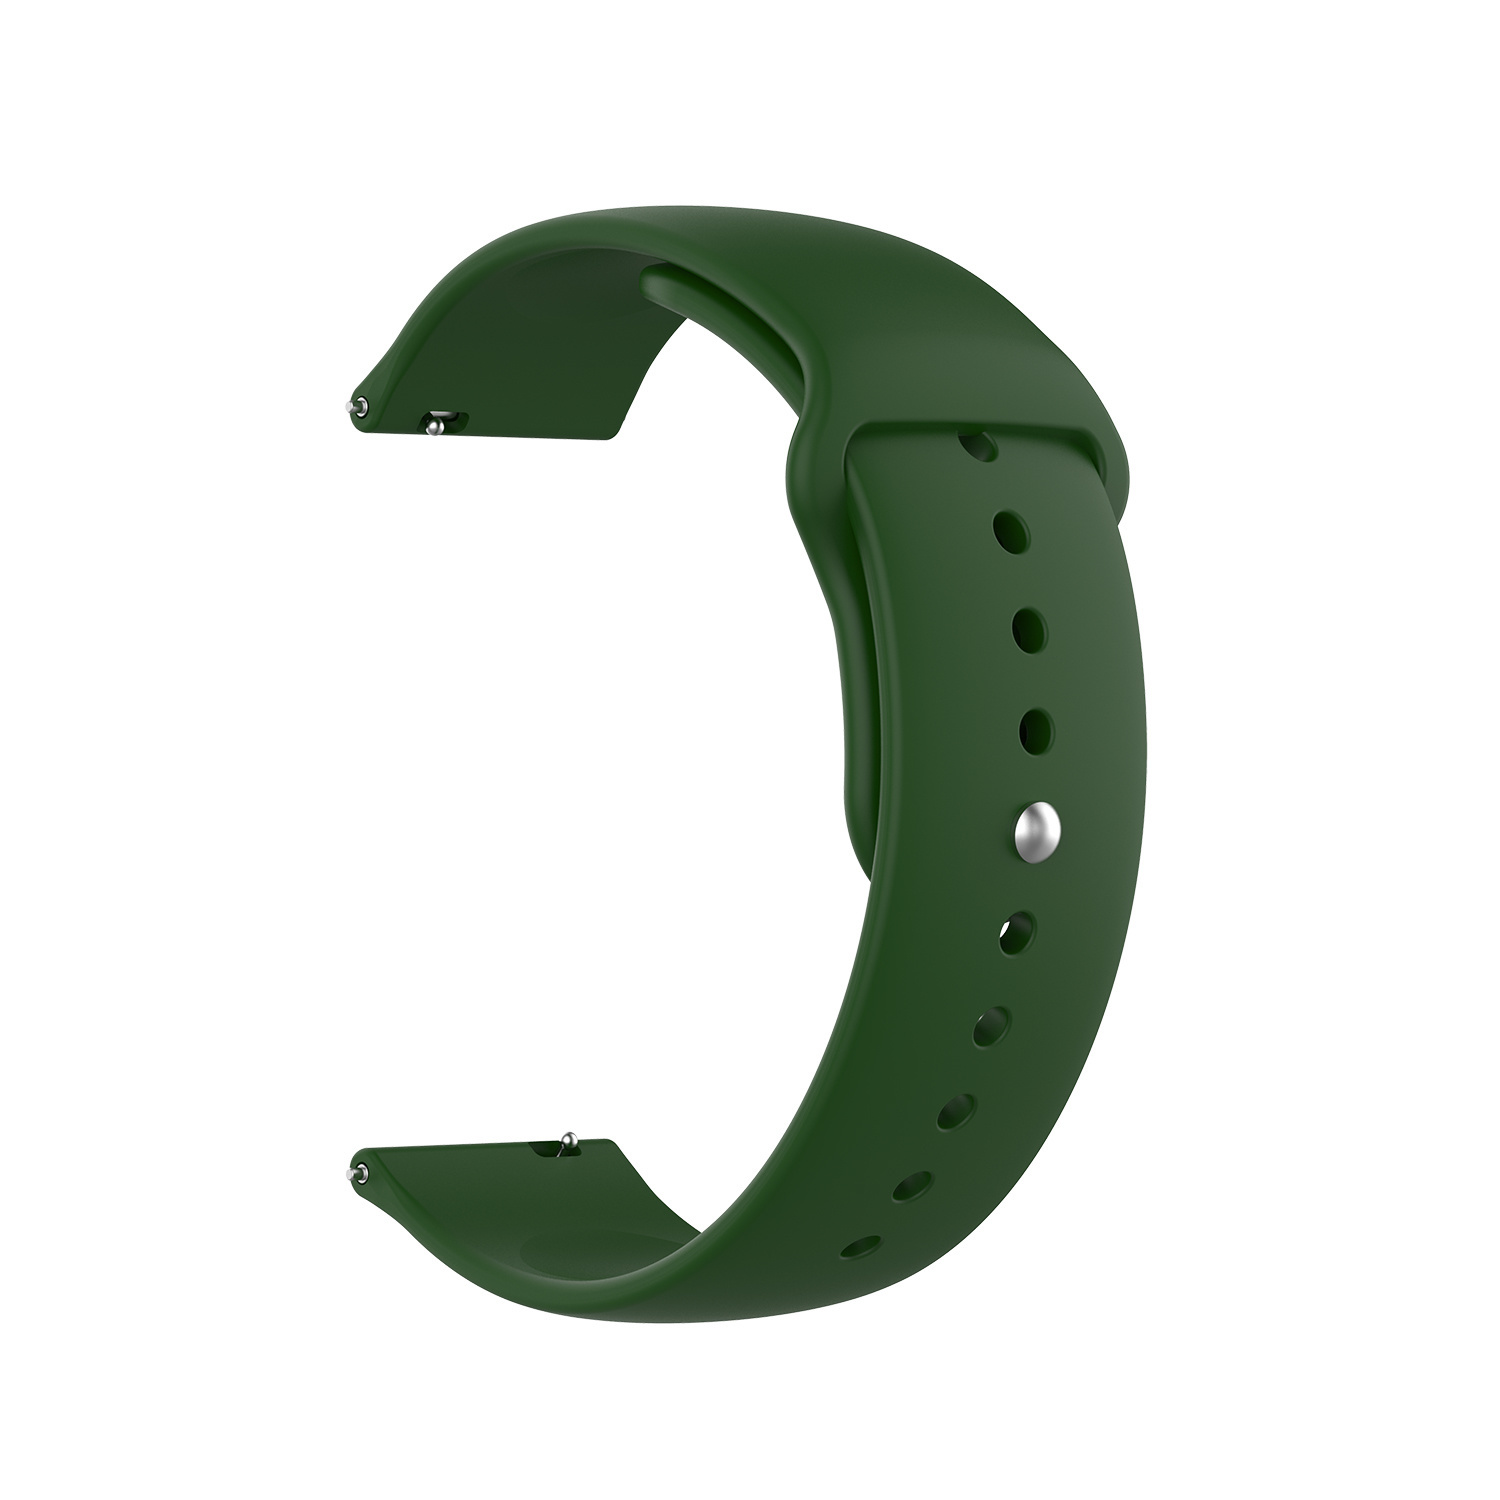 Cinturino sport in silicone per Samsung Galaxy Watch - verde militare